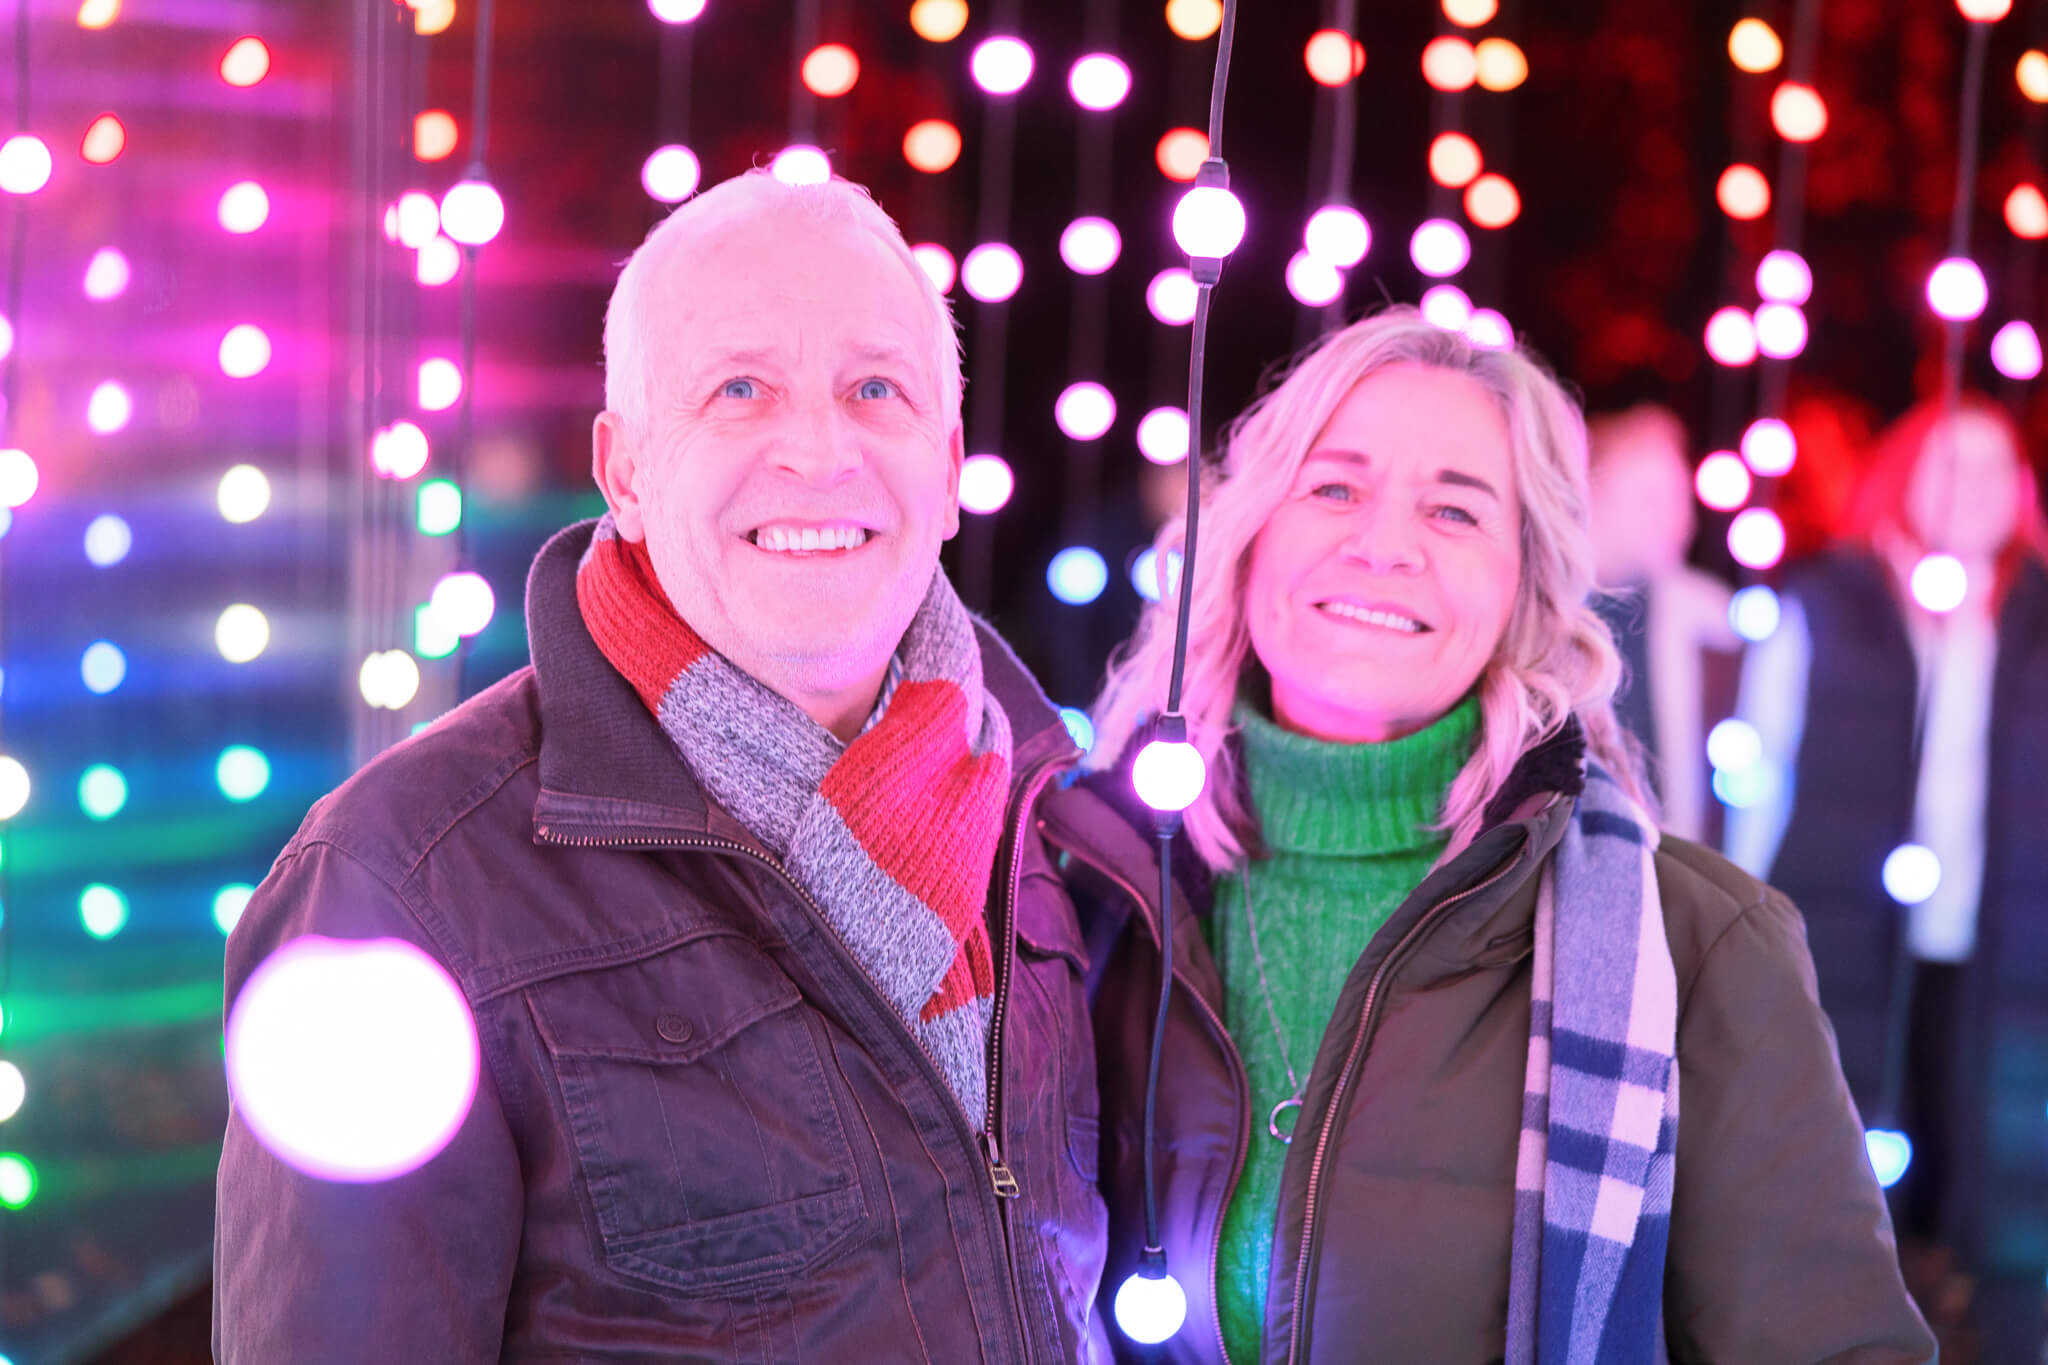 Mature couple walking through illuminated lights